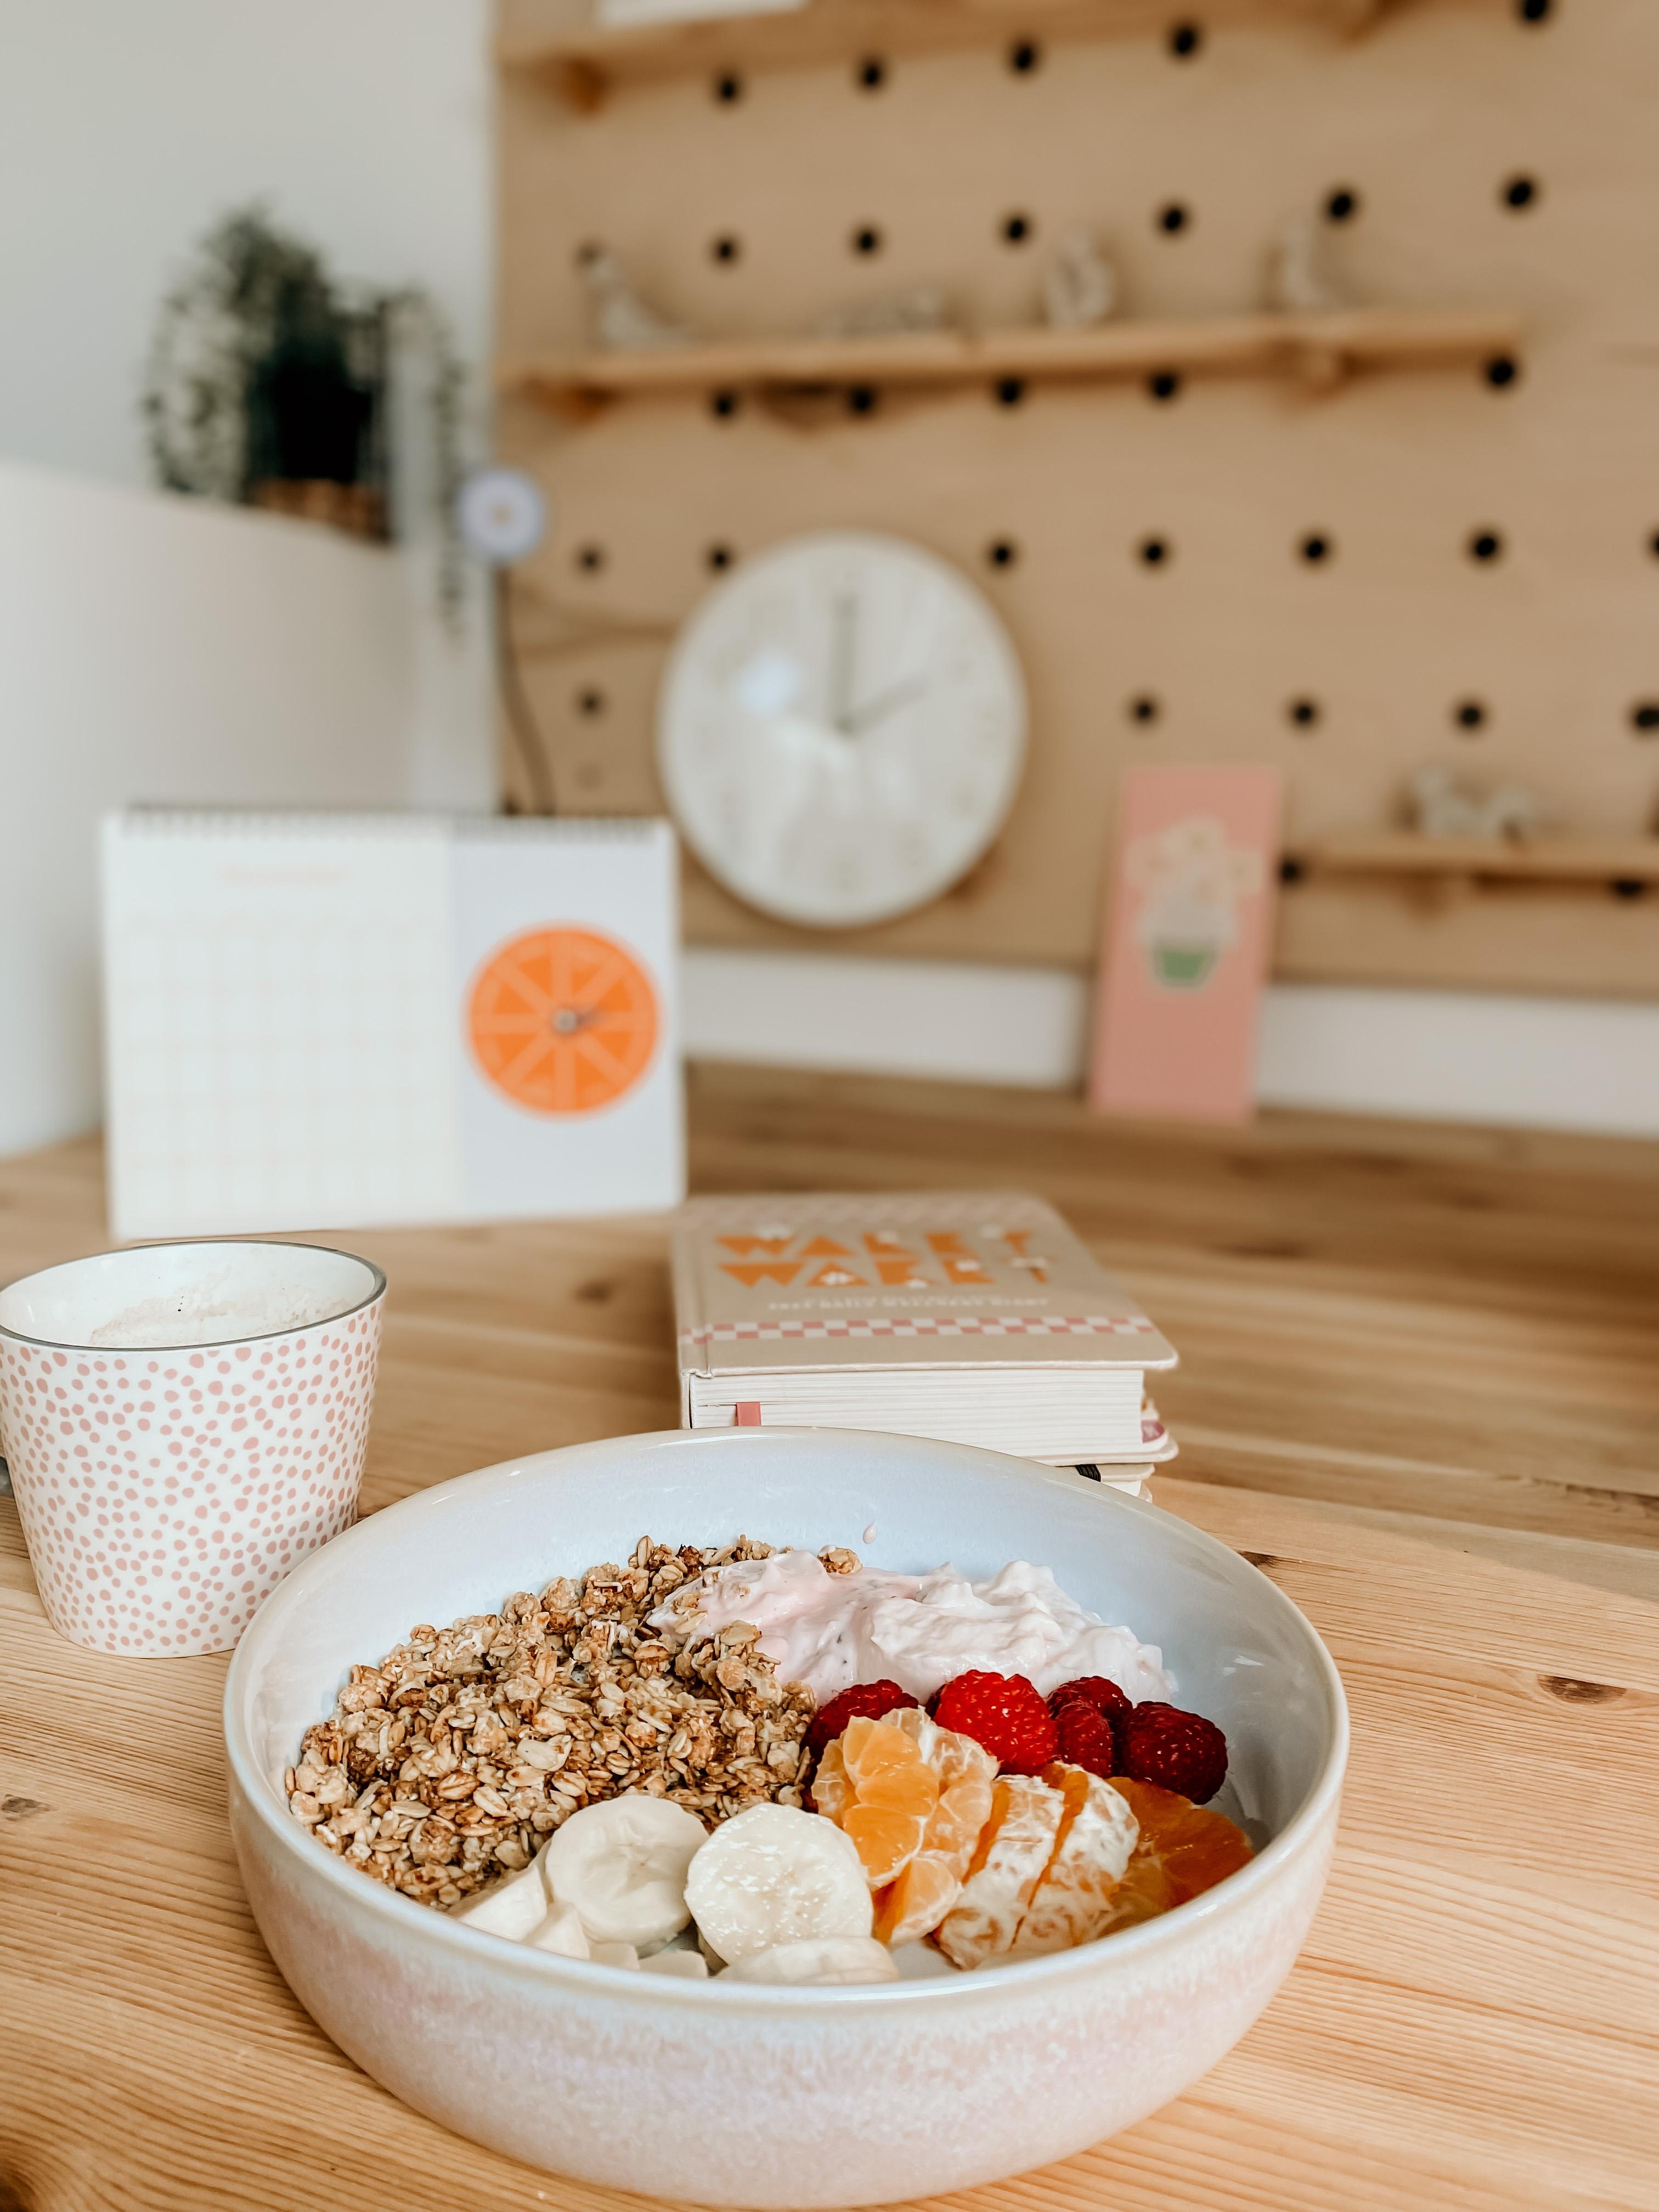 Breakfast just tastes better in a pretty bowl 🥣 #motelamiio #ceramics #healthybreakfast #arbeitszimmer #rosaliebe #buntistbesser 